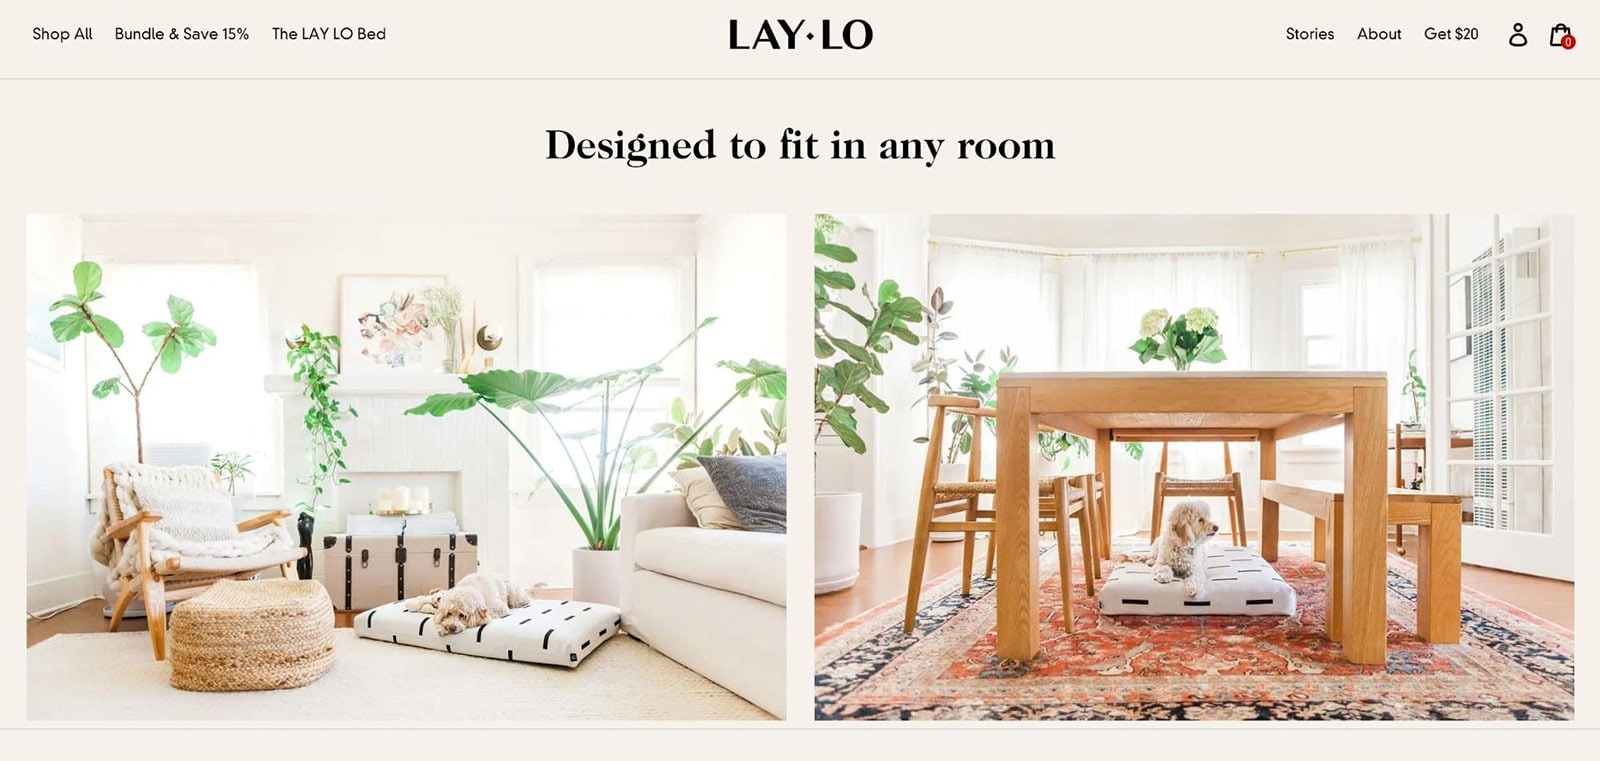 lay lo dog beds product photos natural setting